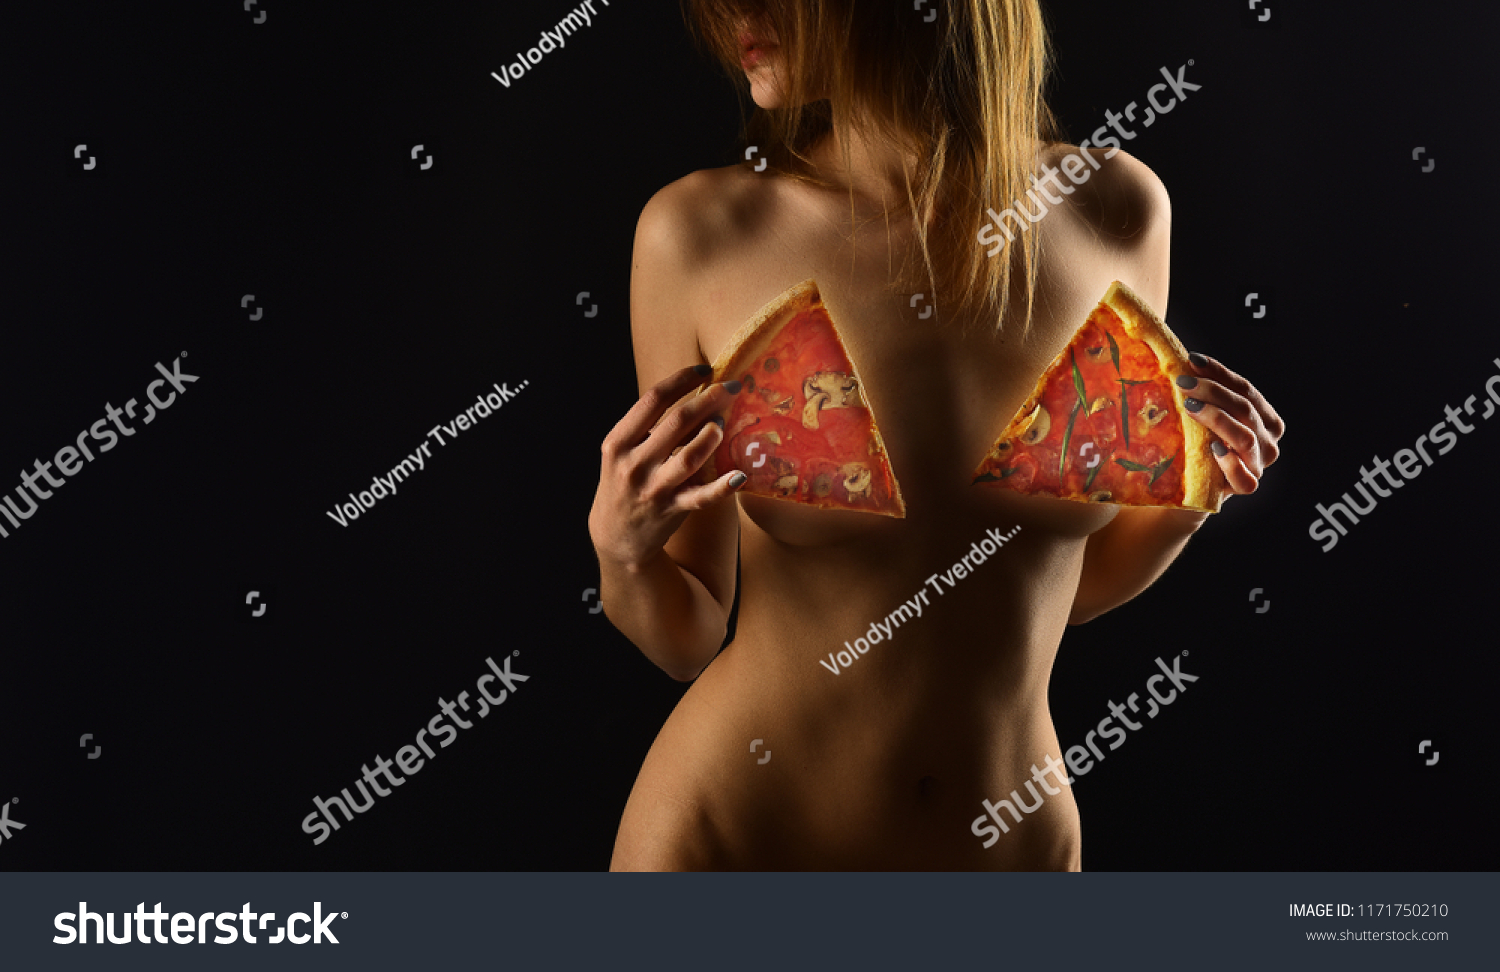 Pizza girl nude